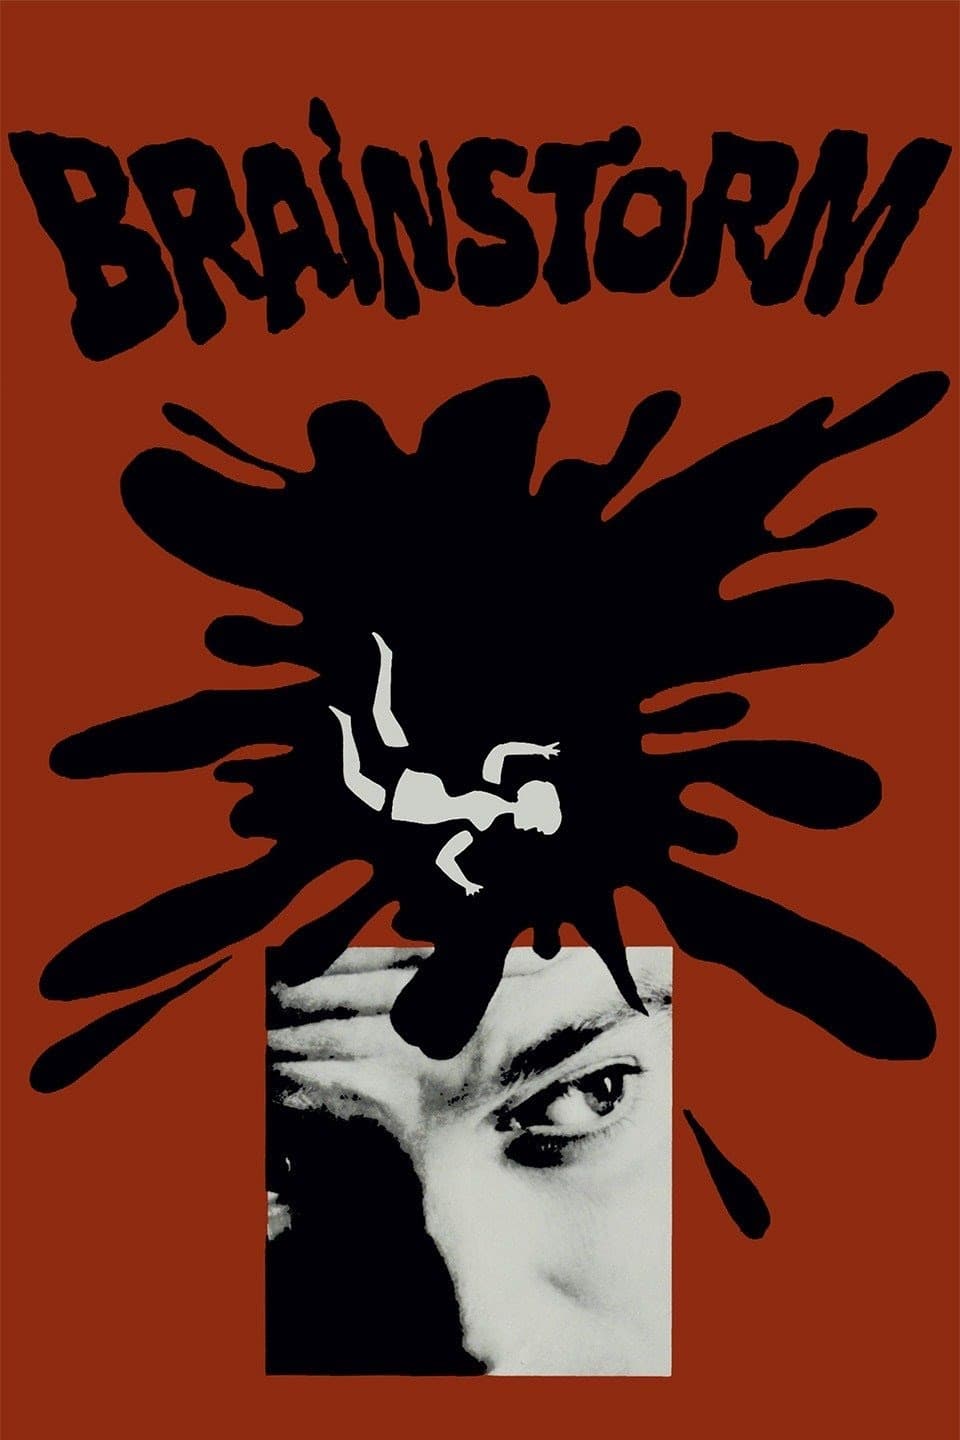 Brainstorm (1965)